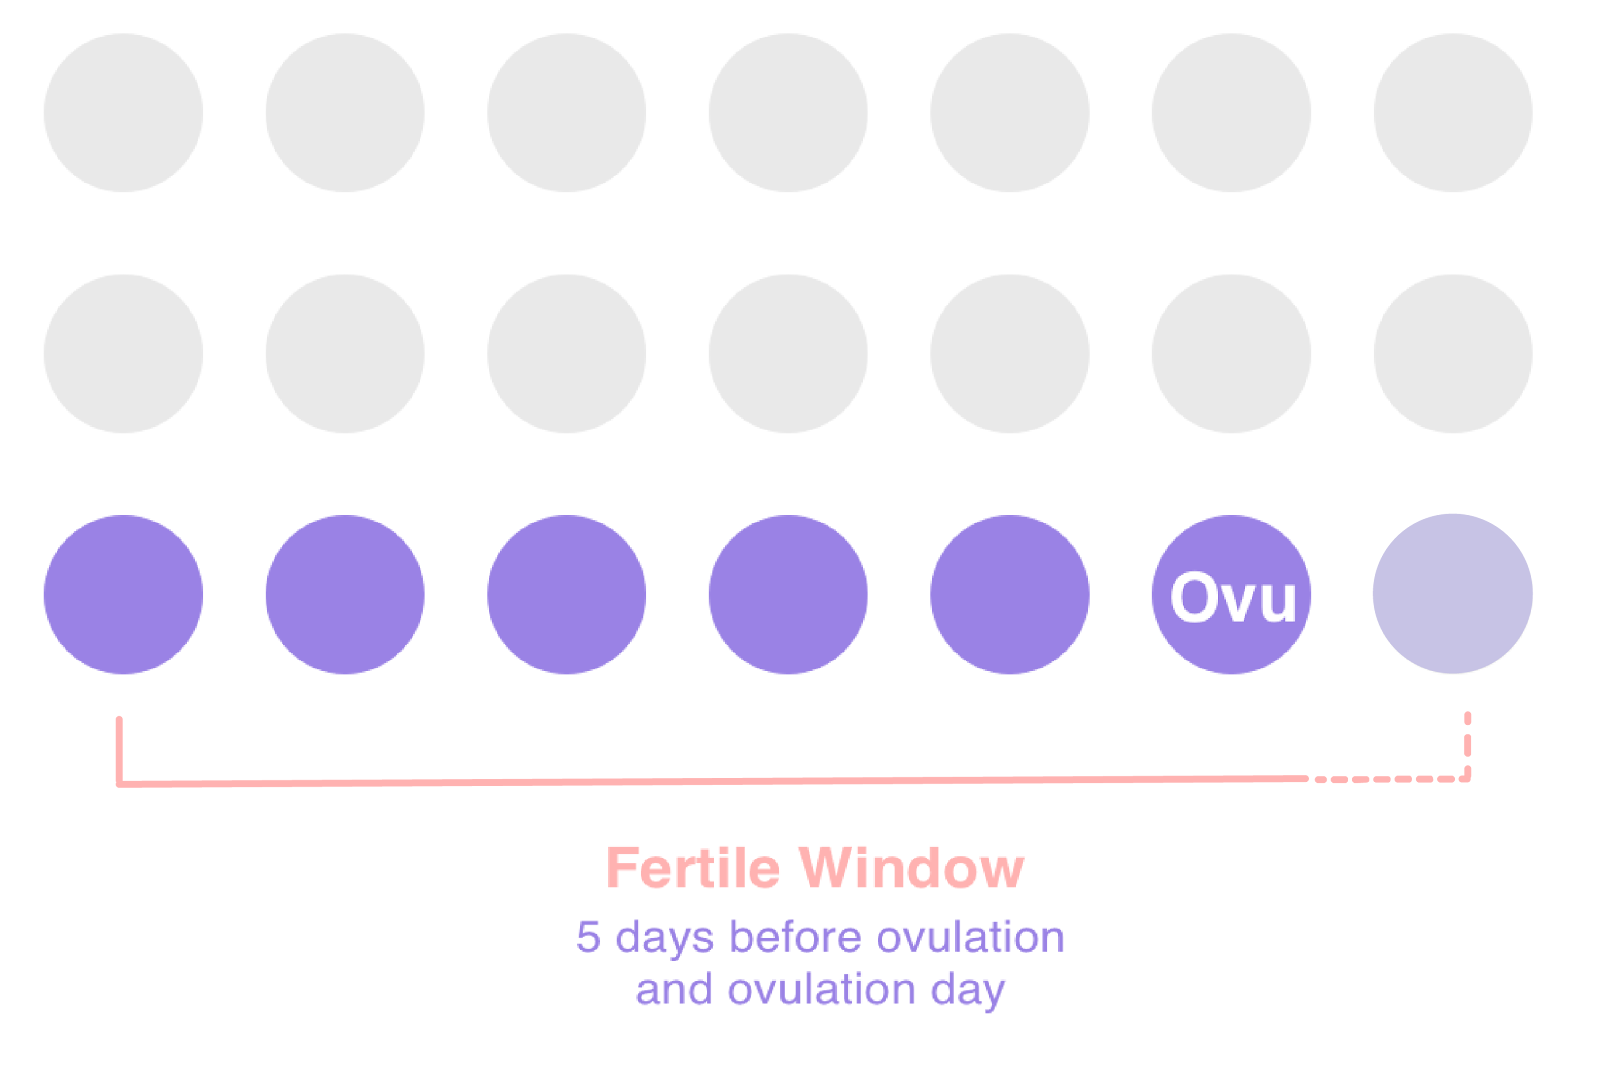 Timing sex during fertile window